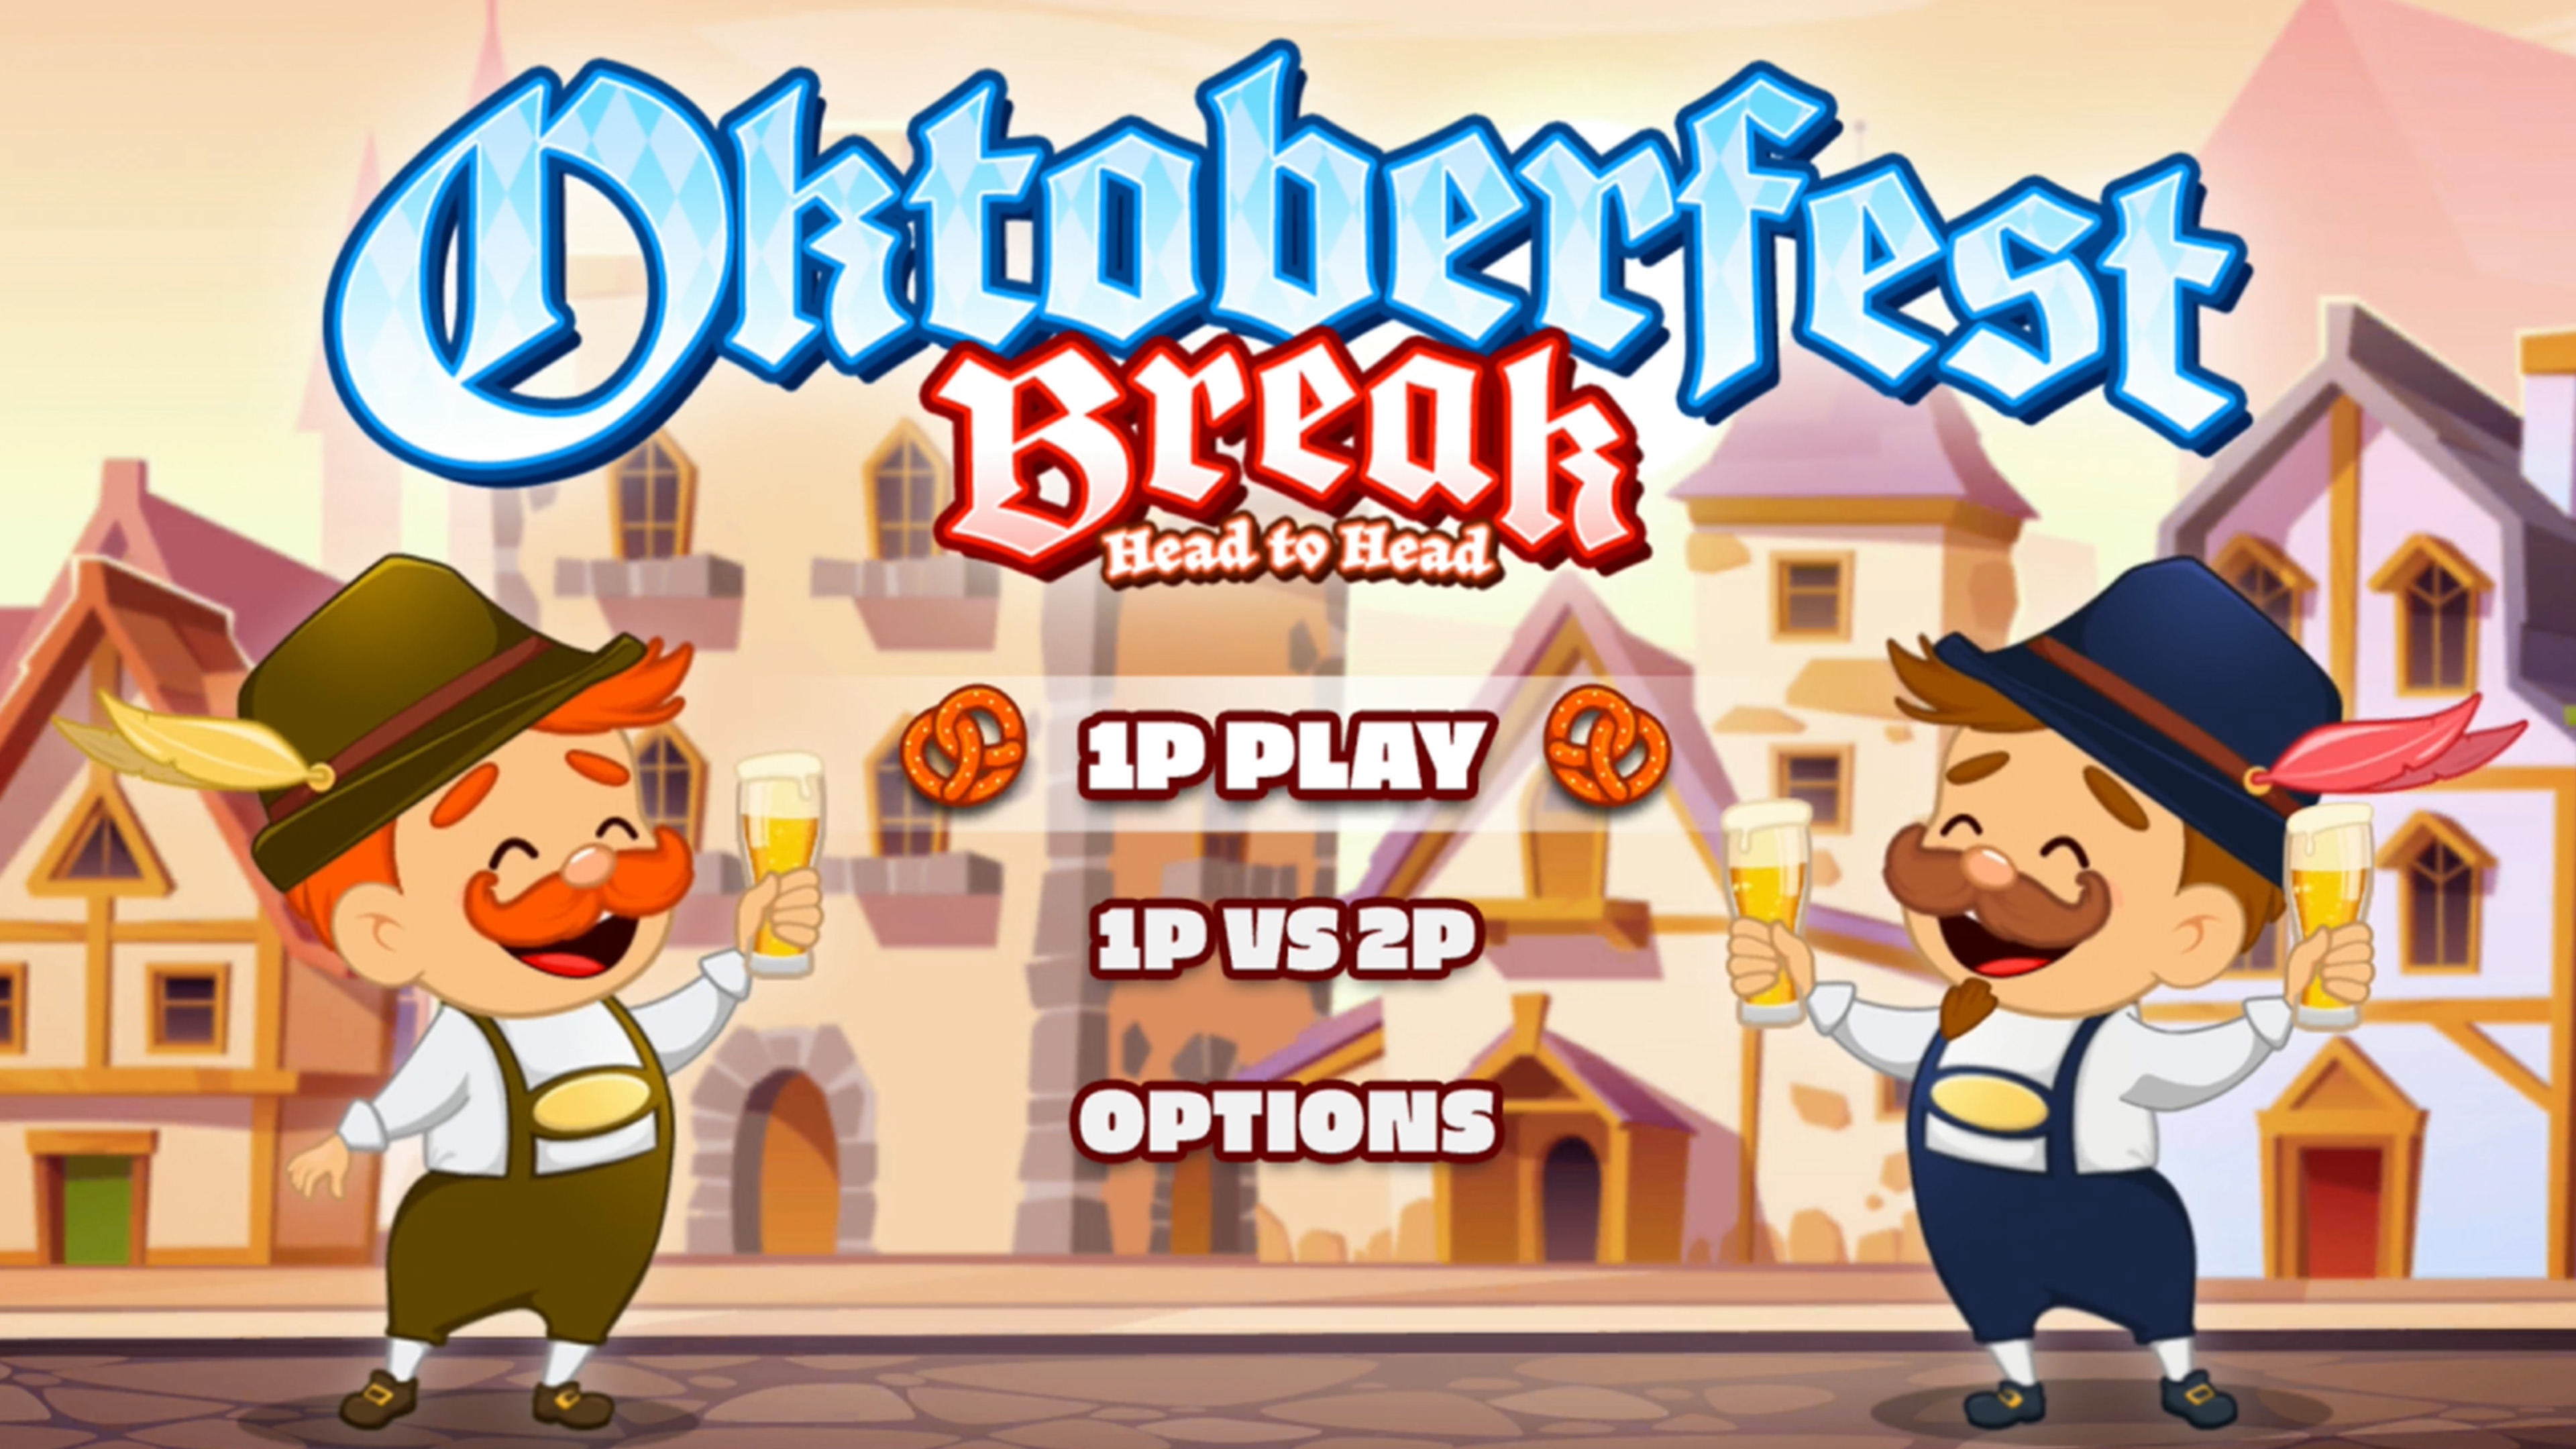 Скриншот №1 к Oktoberfest Break Head to Head